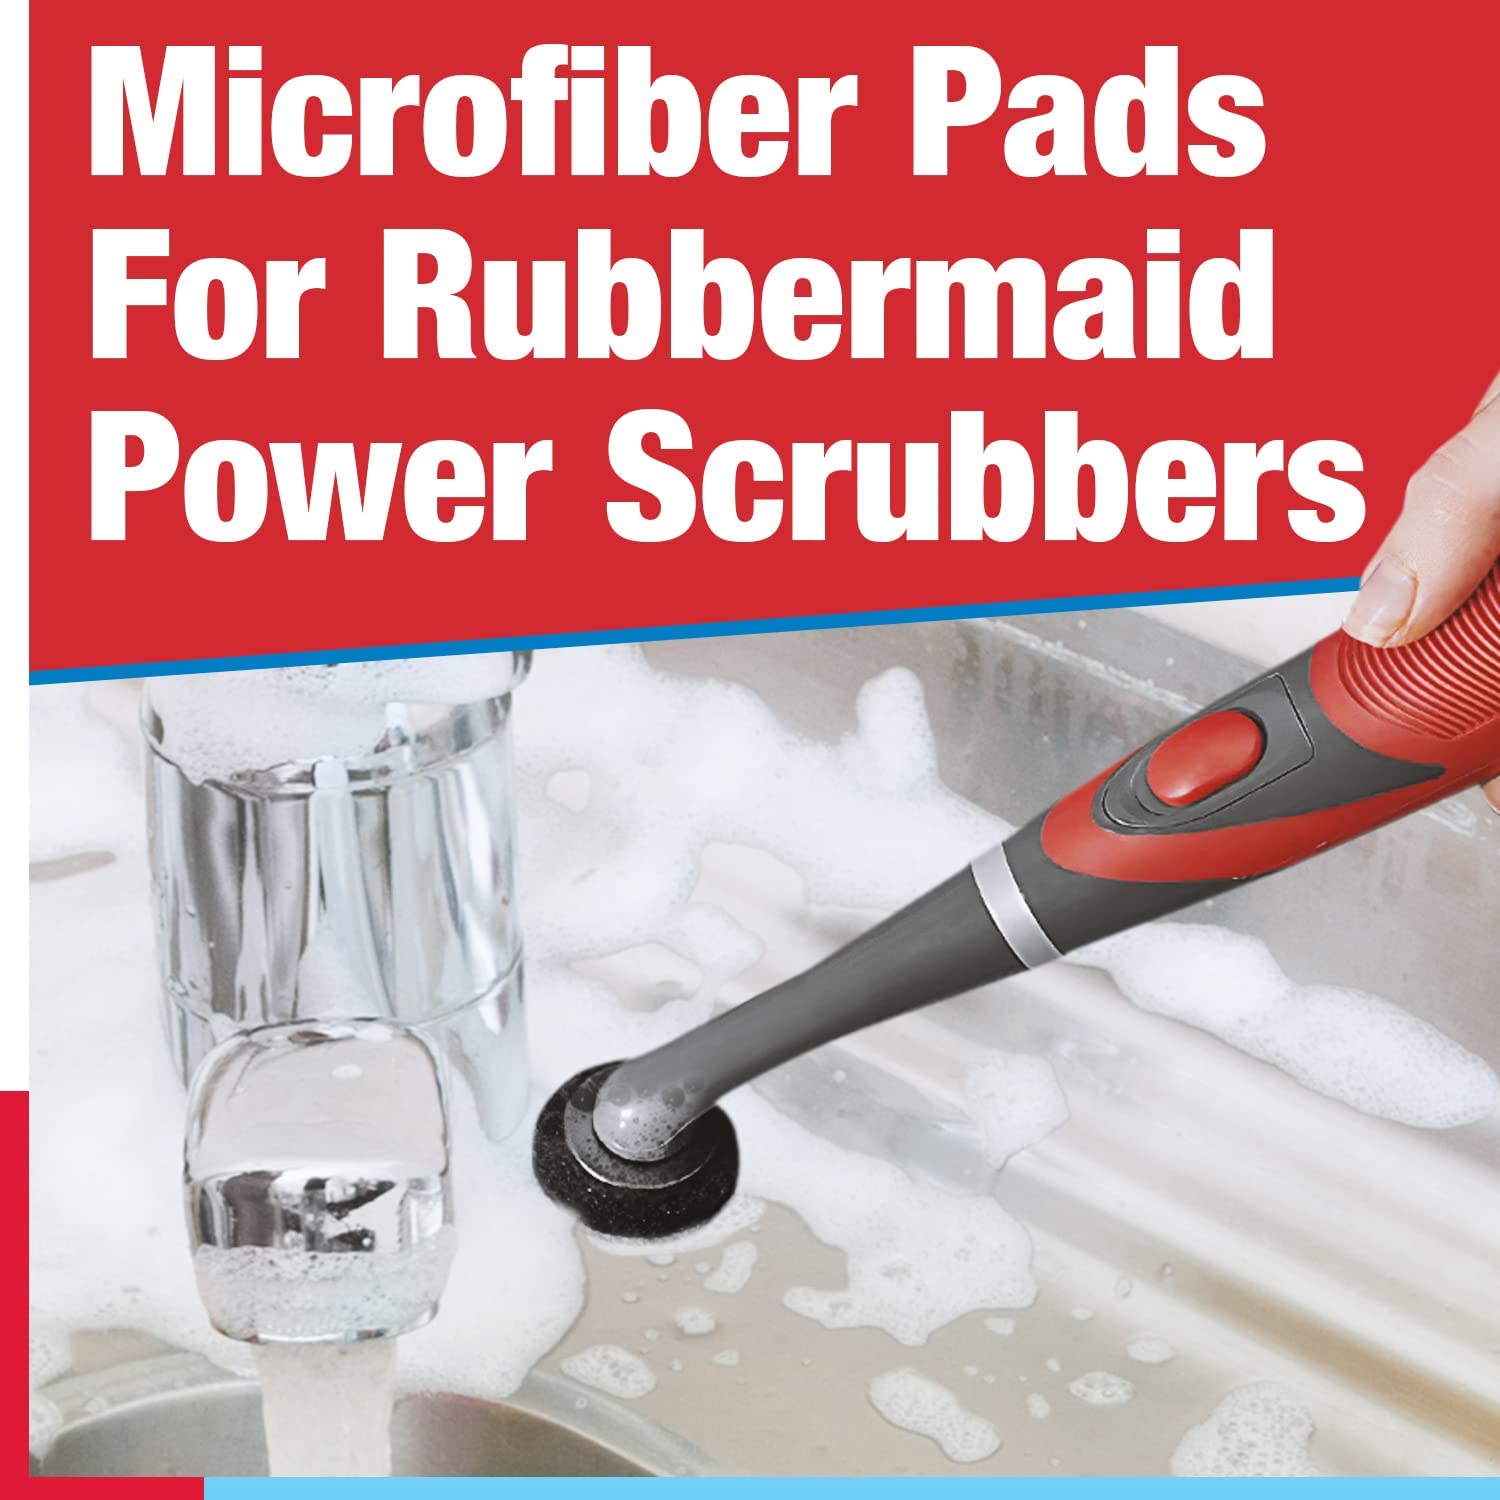 30-Pack Impresa Microfiber Scrubbing Pads for Rubbermaid Reveal